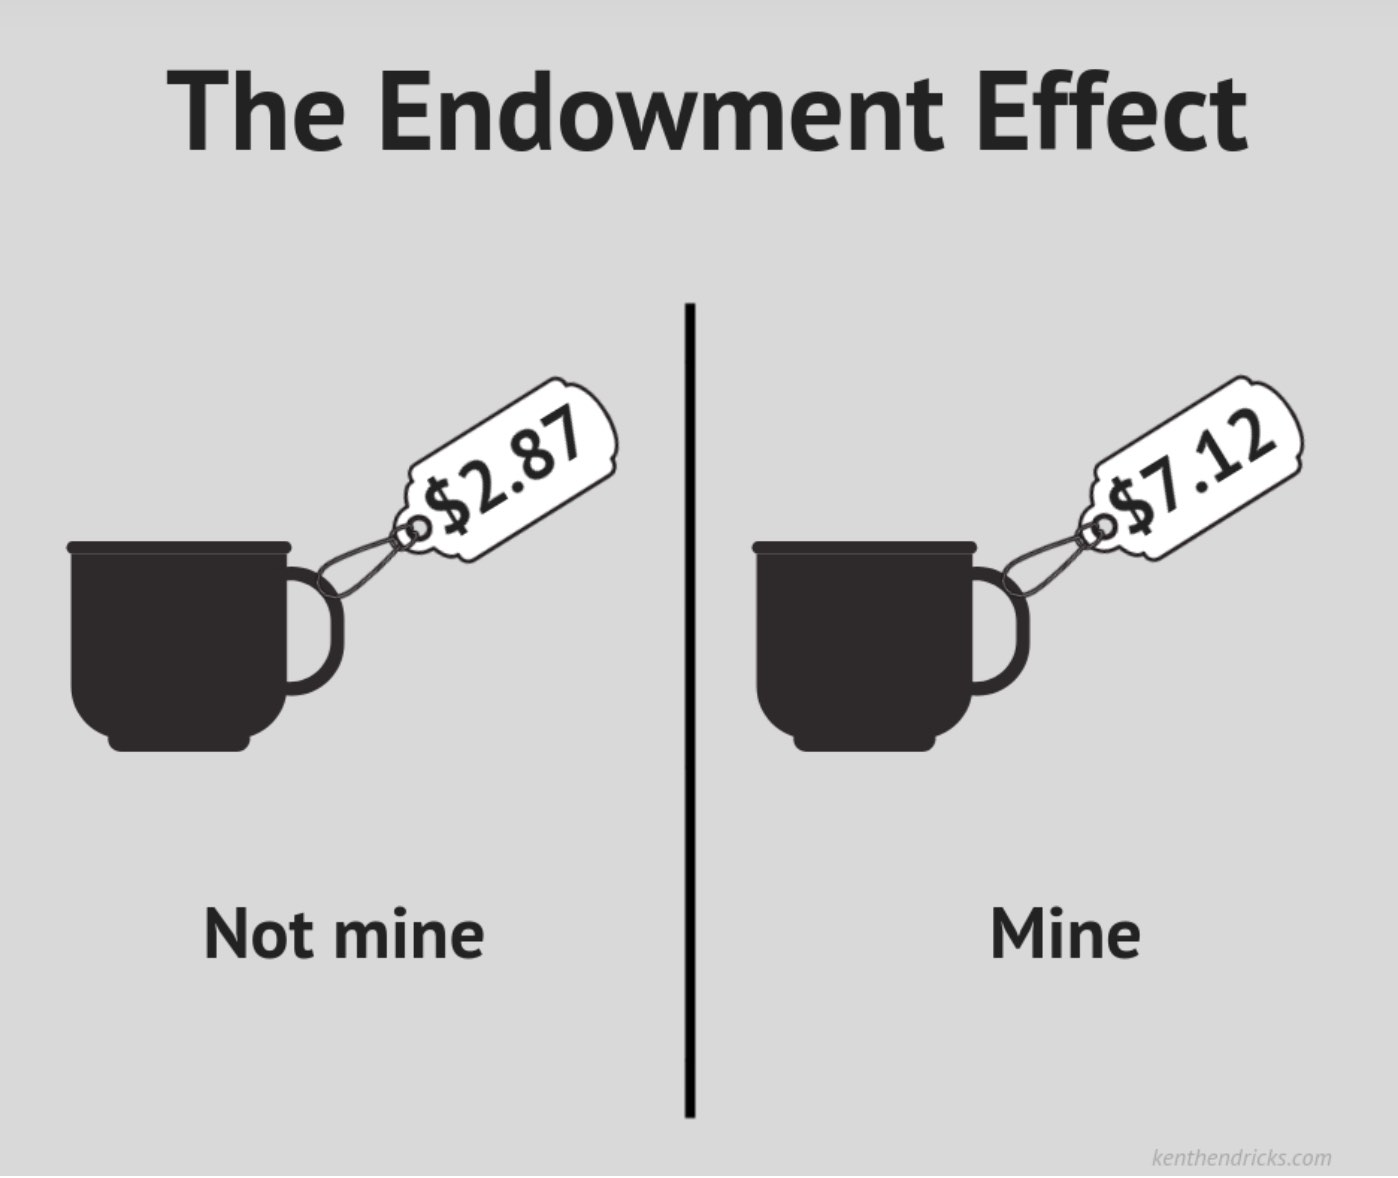 The Endowment effect